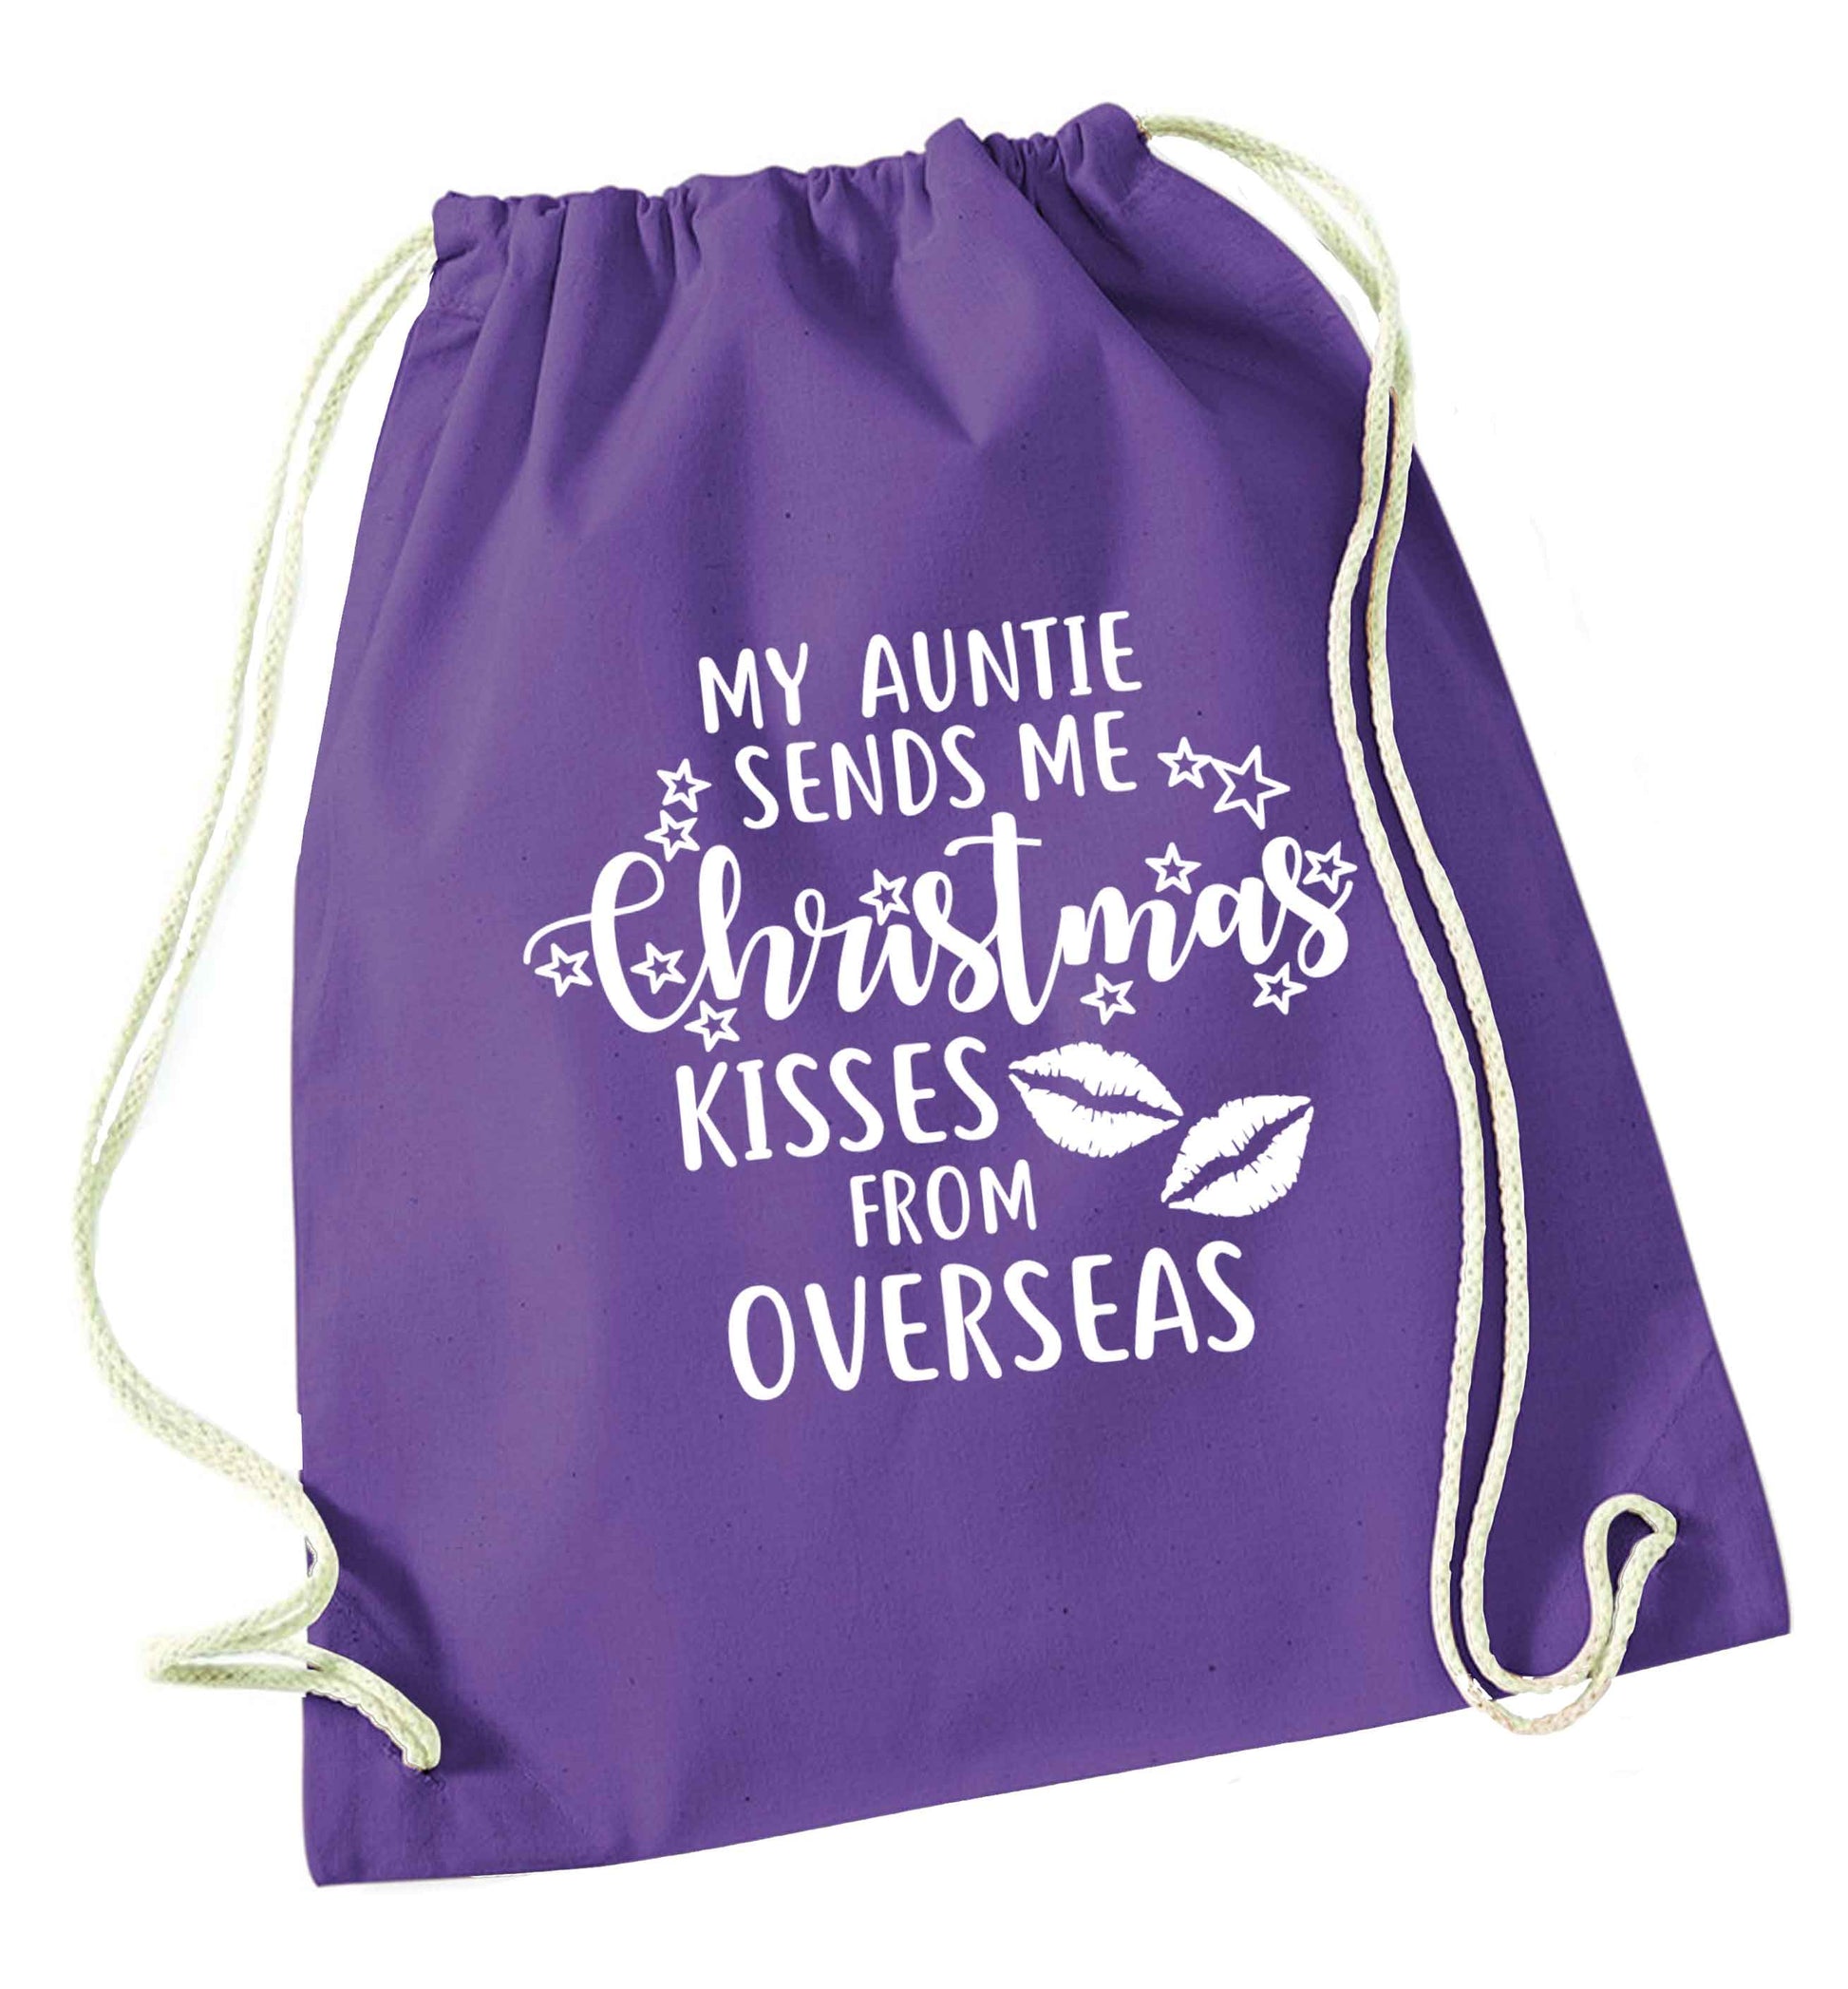 Auntie Christmas Kisses Overseas purple drawstring bag